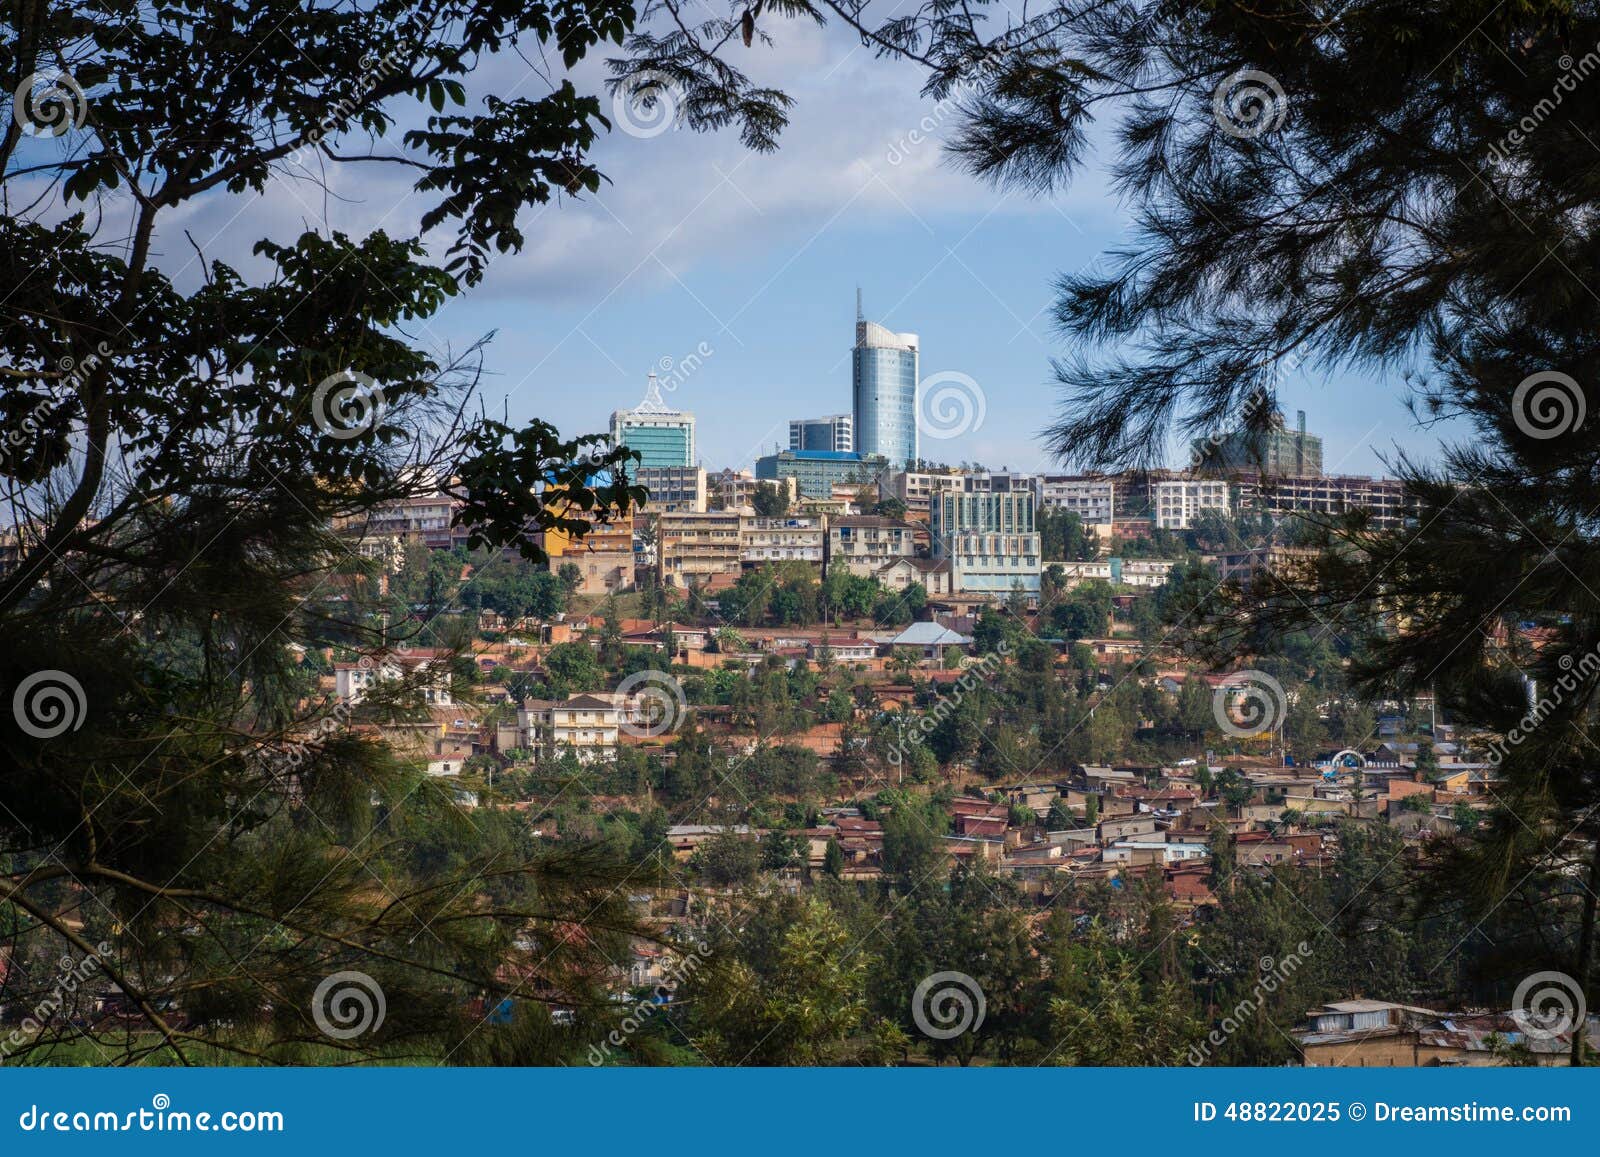 offices in kigali city, rwanda